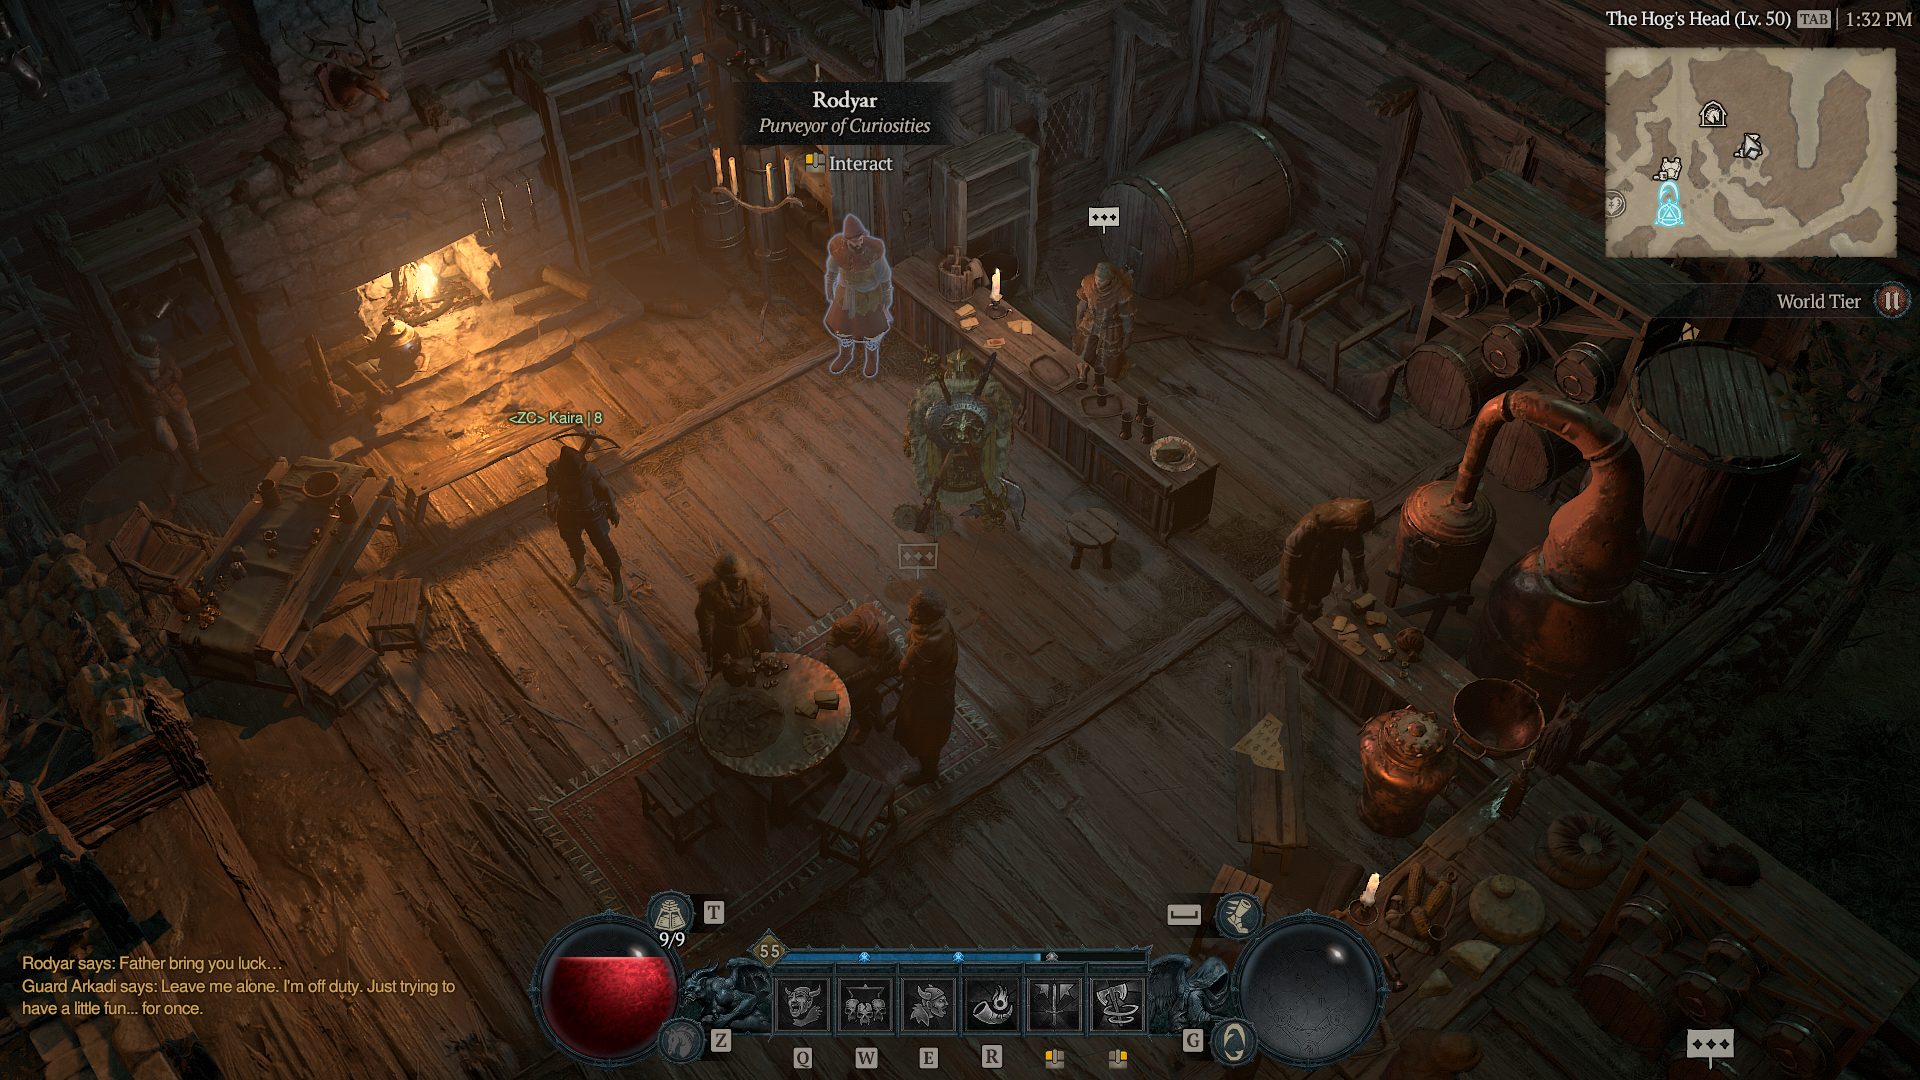 A Barbarian talks to a Purveyor of Curiosity in a Diablo 4 tavern